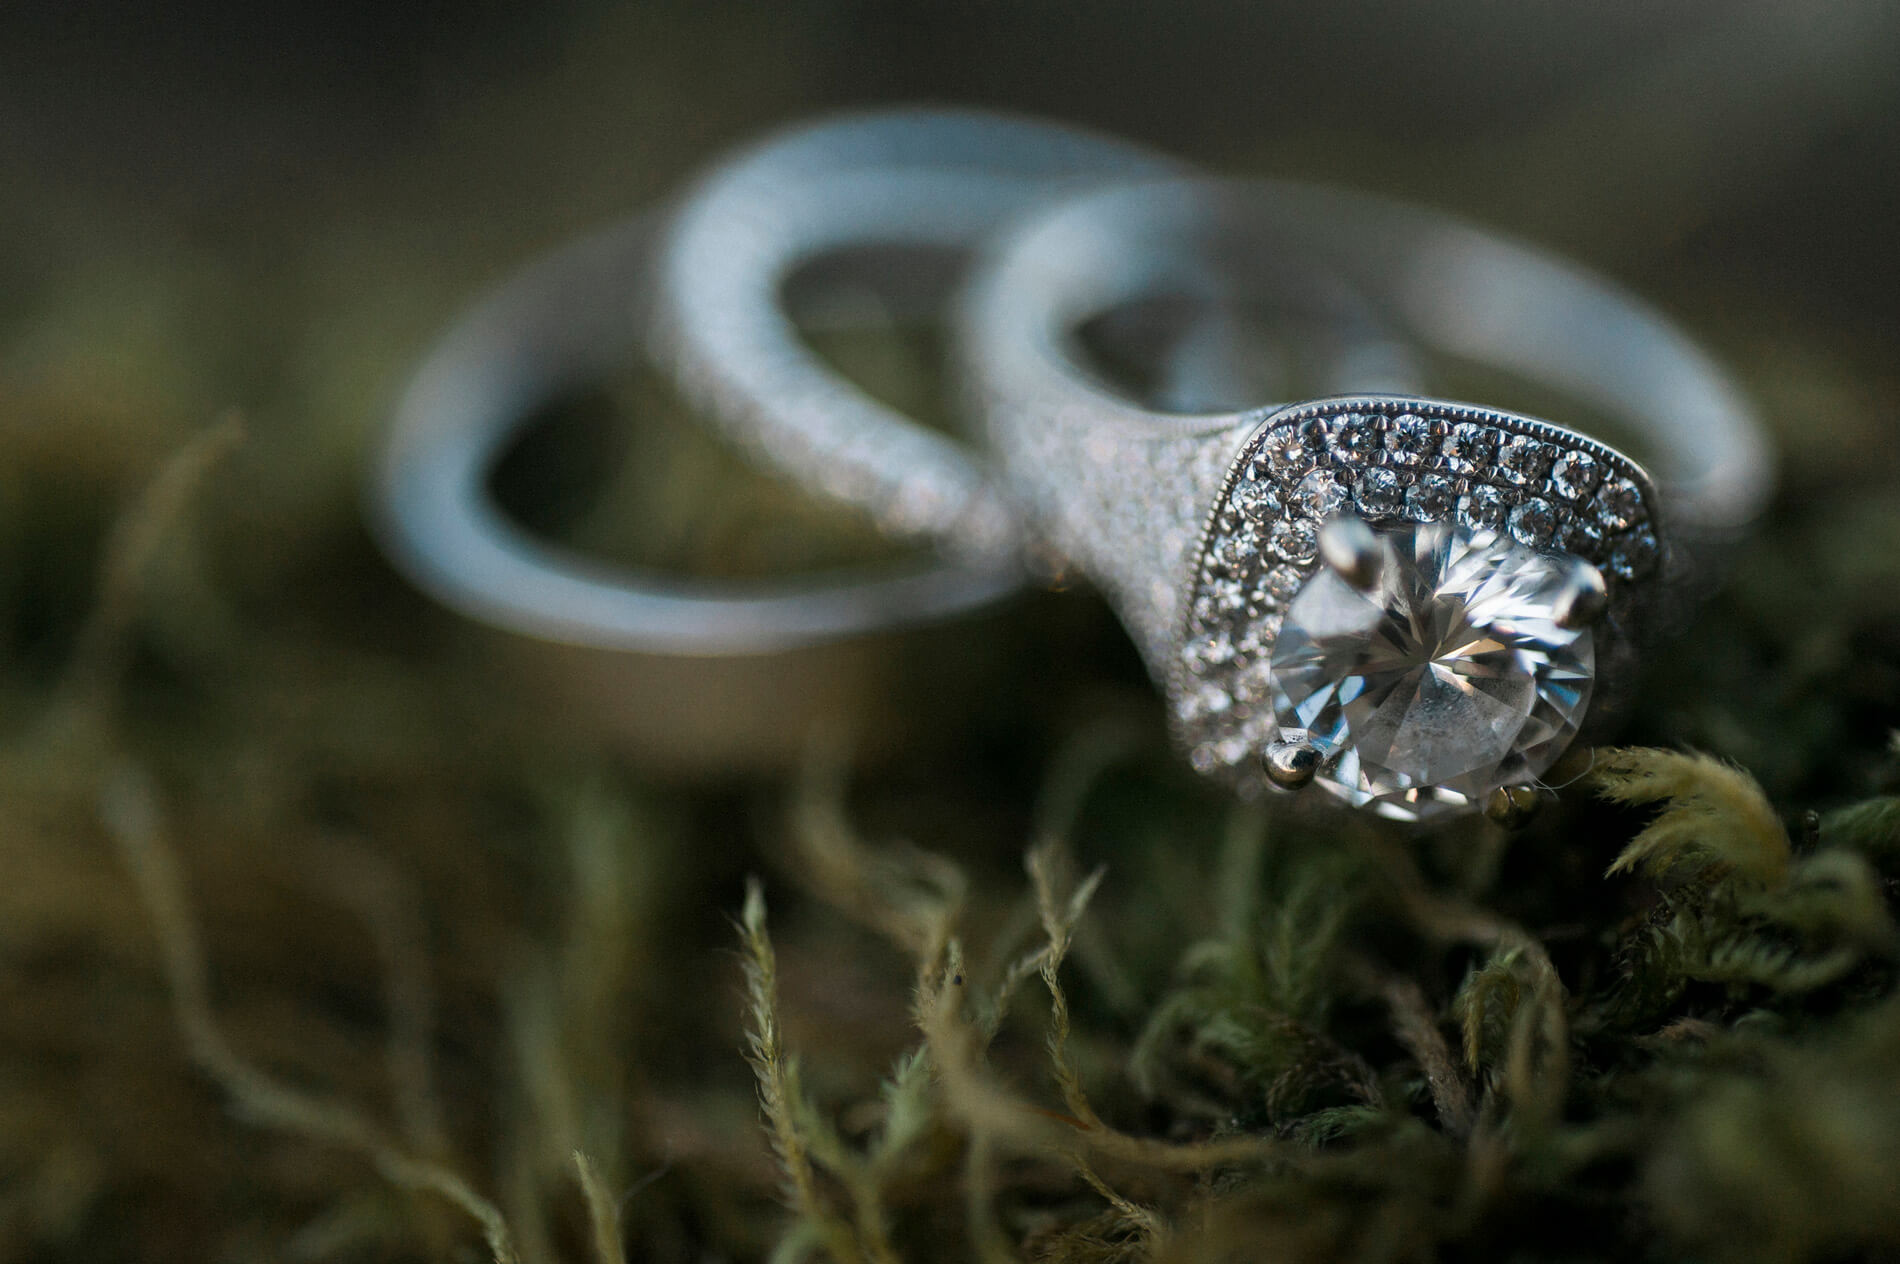 close up of bride and groom diamond wedding rings